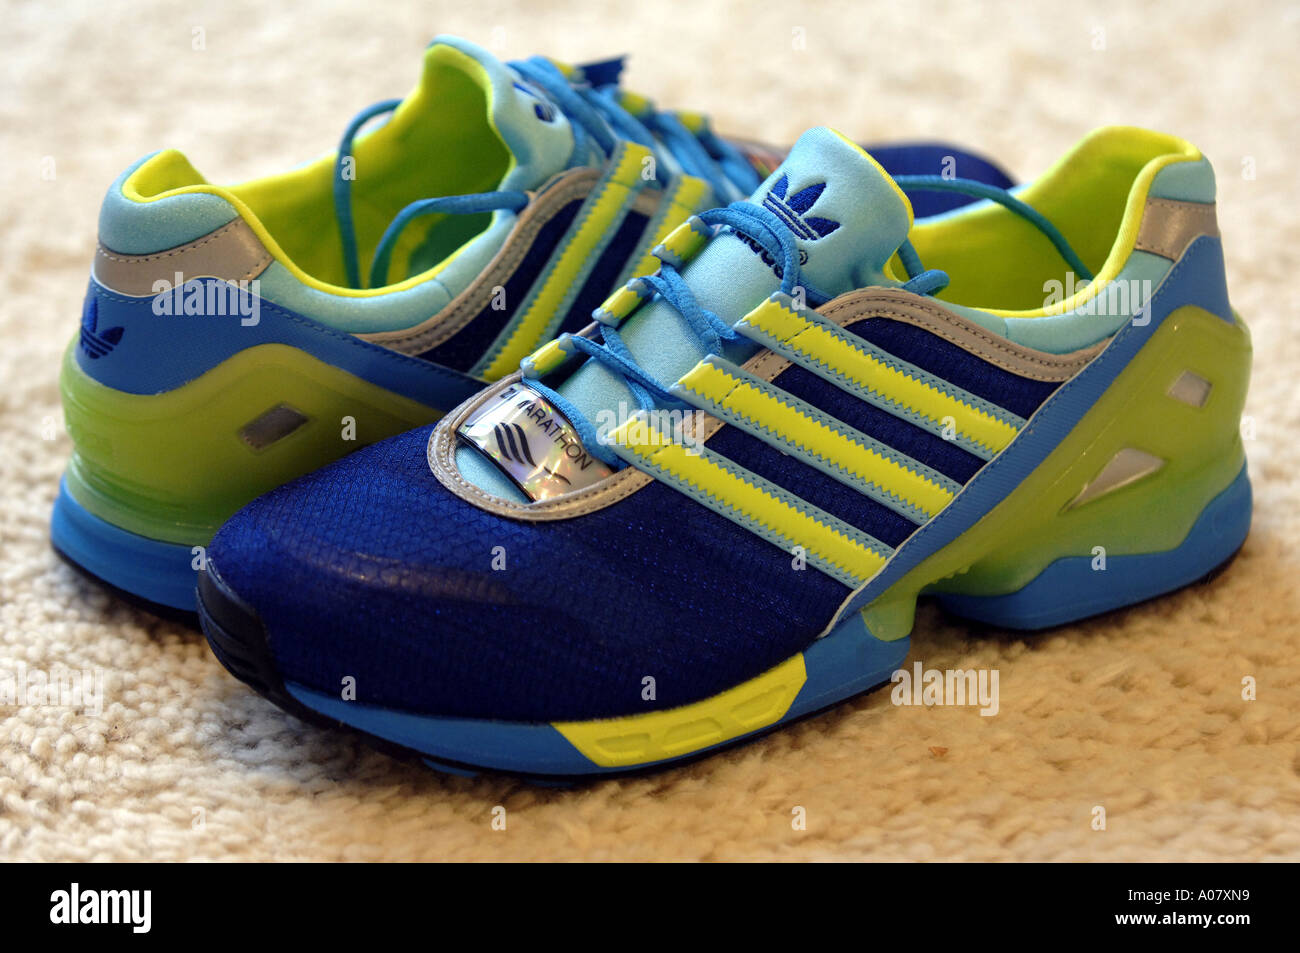 adidas training shoes modern new green blue fluorscent bright vivid  marathon design Stock Photo - Alamy